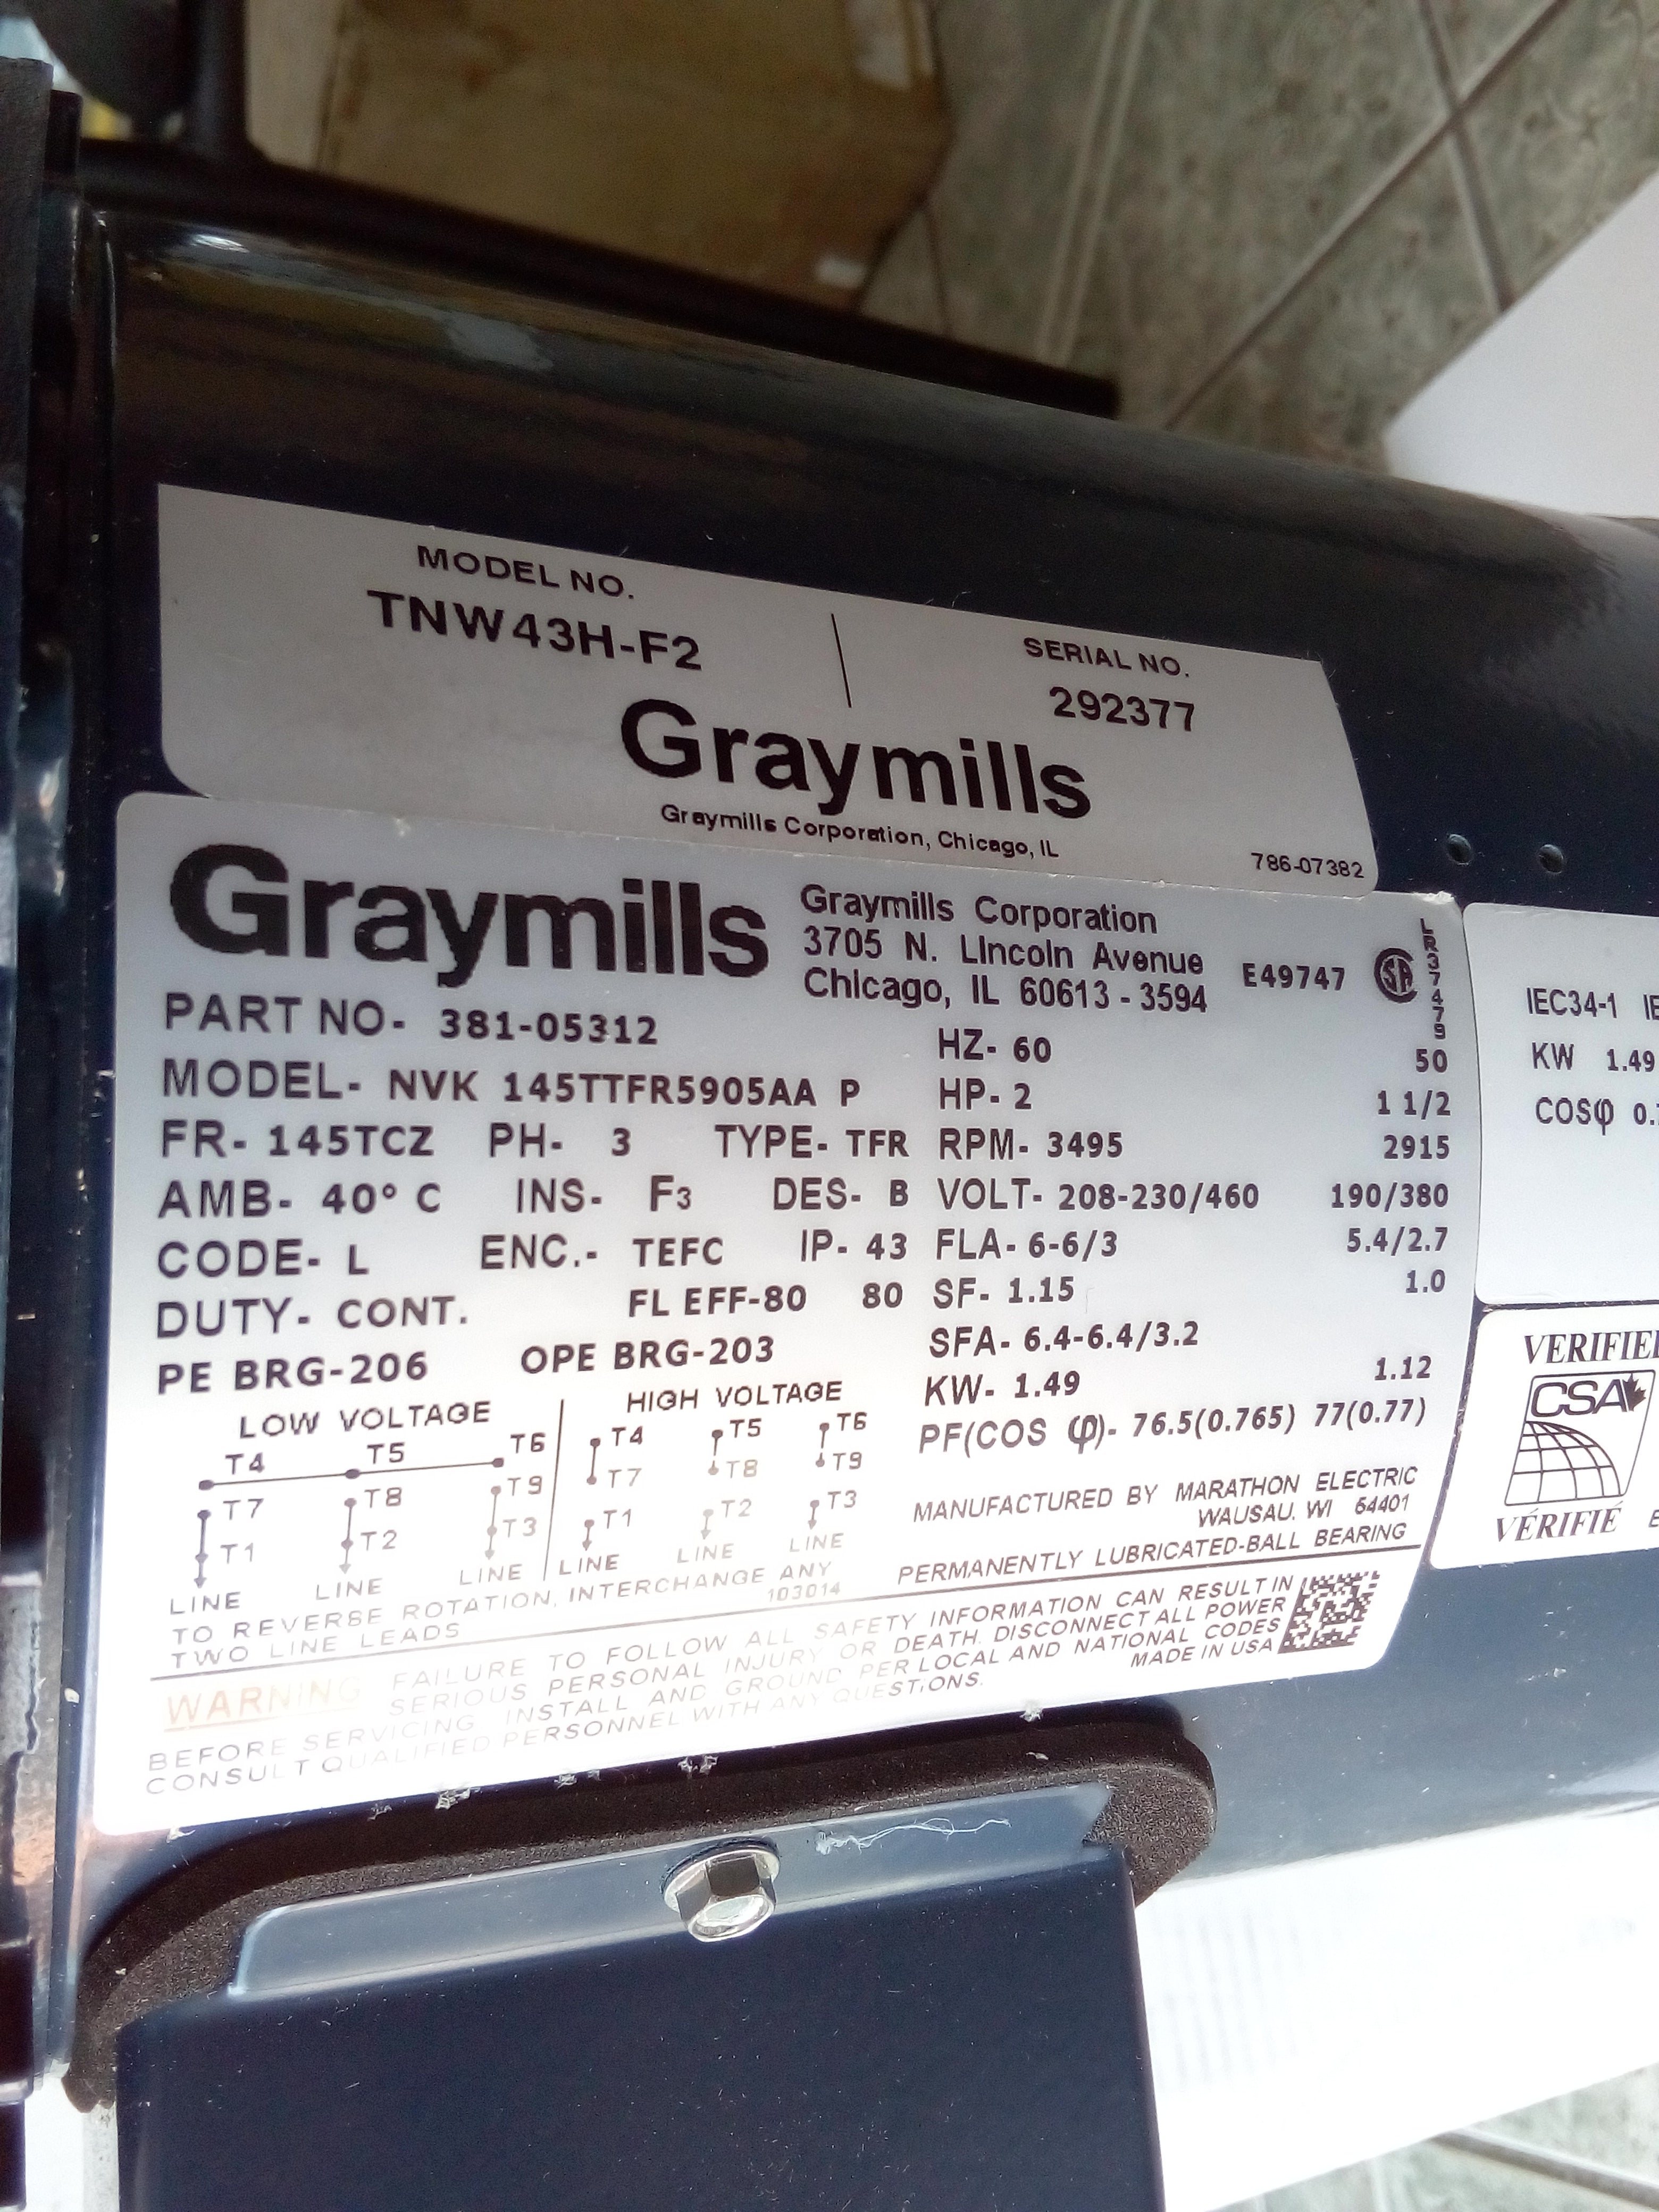 Bomba de Corriente Alterna 2 HP Graymills TNW43H-F2